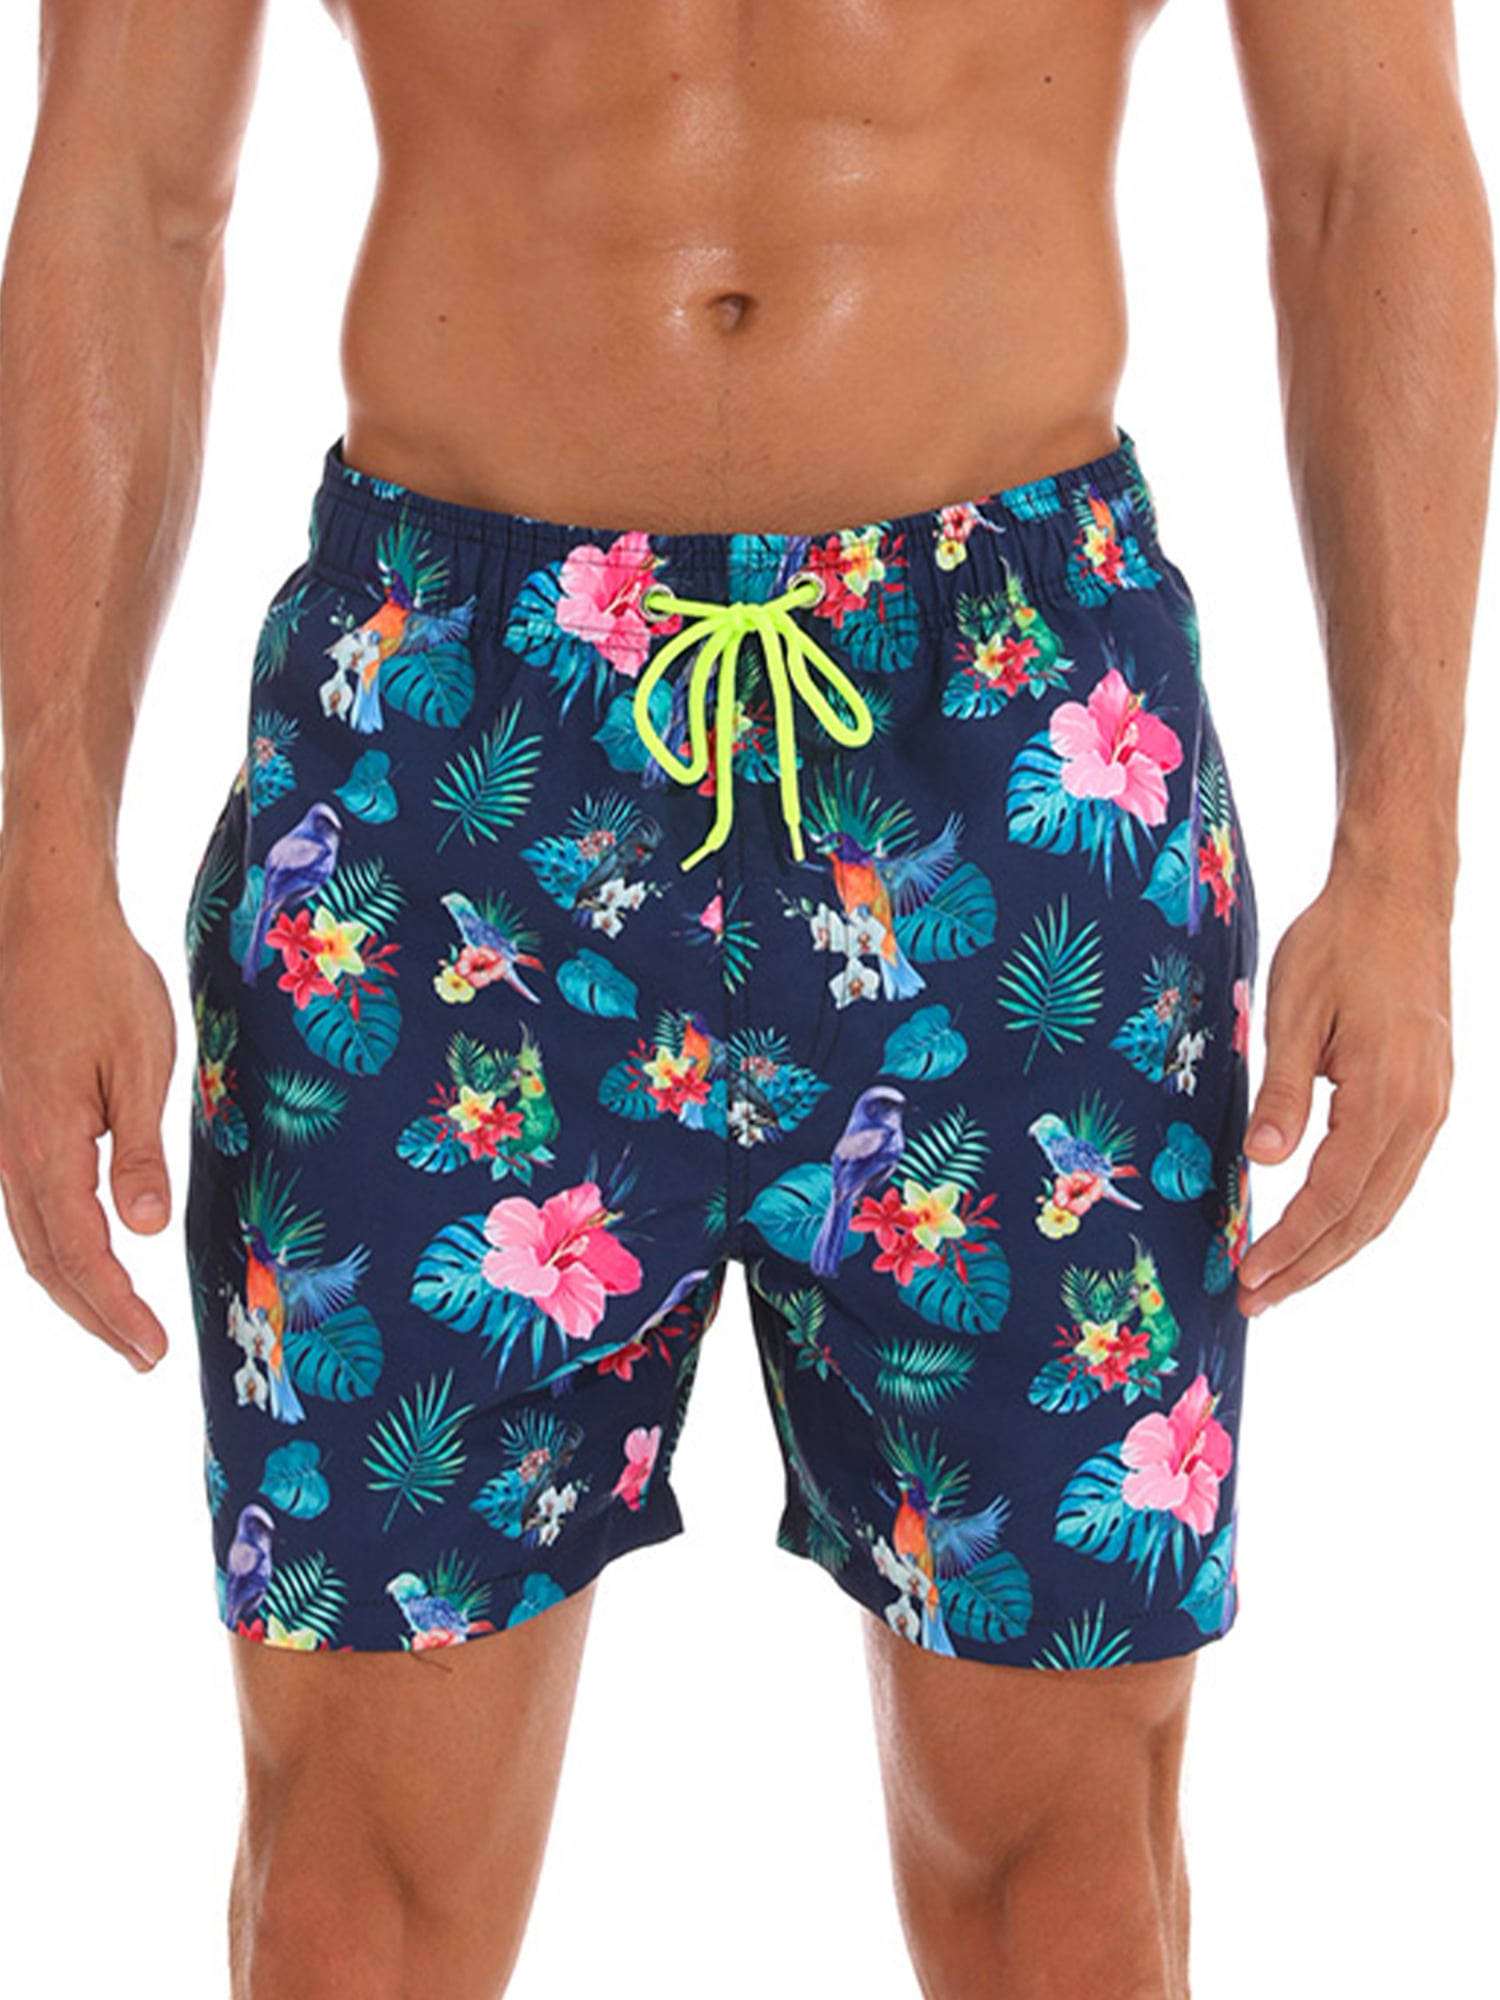 Mens Quick Dry 3D Printed Beach Trunks Board Shorts Casual Summer Swimwear Pants